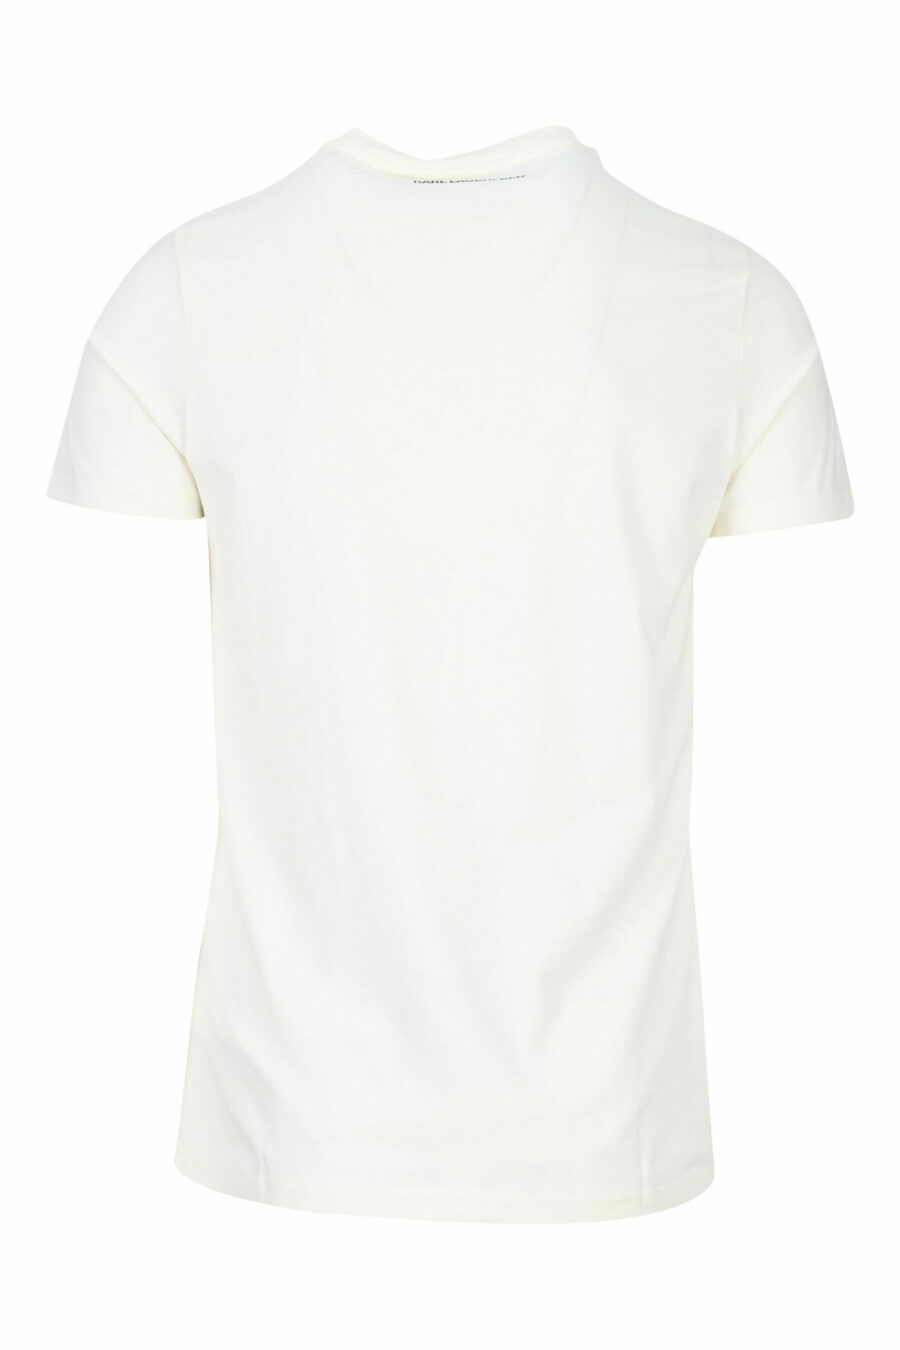 Beige T-shirt with maxilogo "karl" - 4062226681735 1 scaled